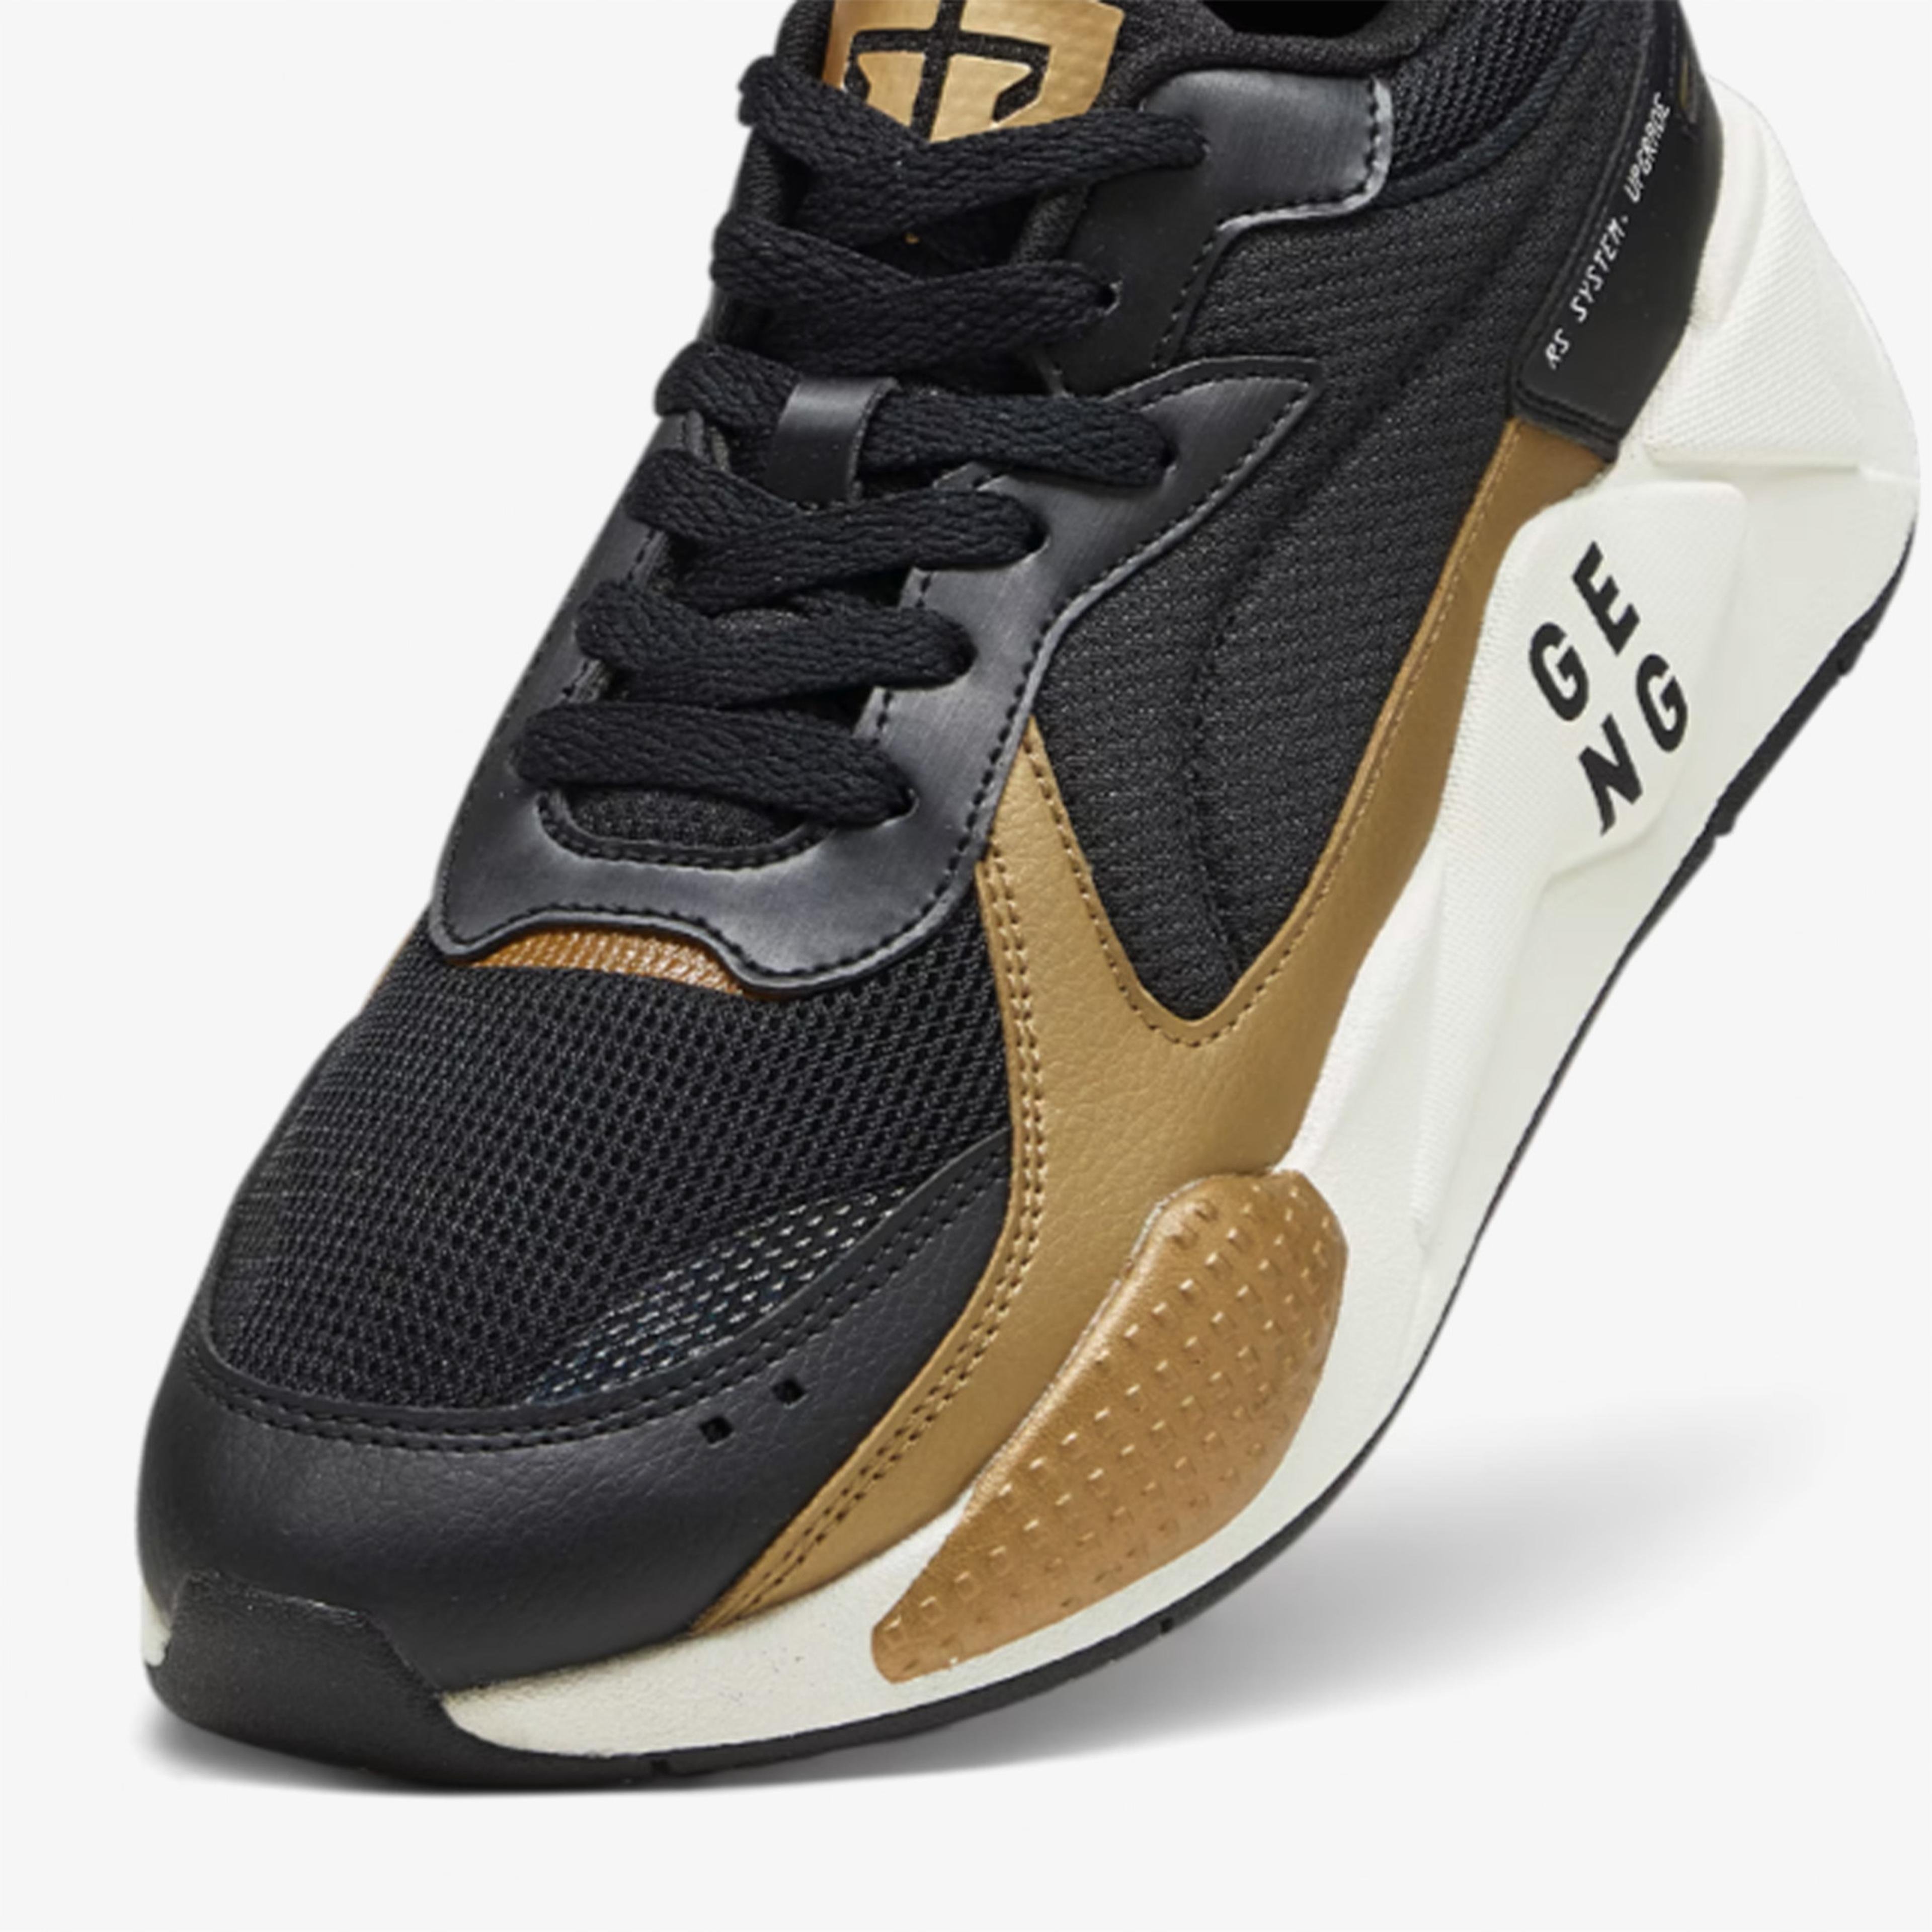 Puma Gen G Rsx Gold Kadın Siyah Spor Ayakkabı